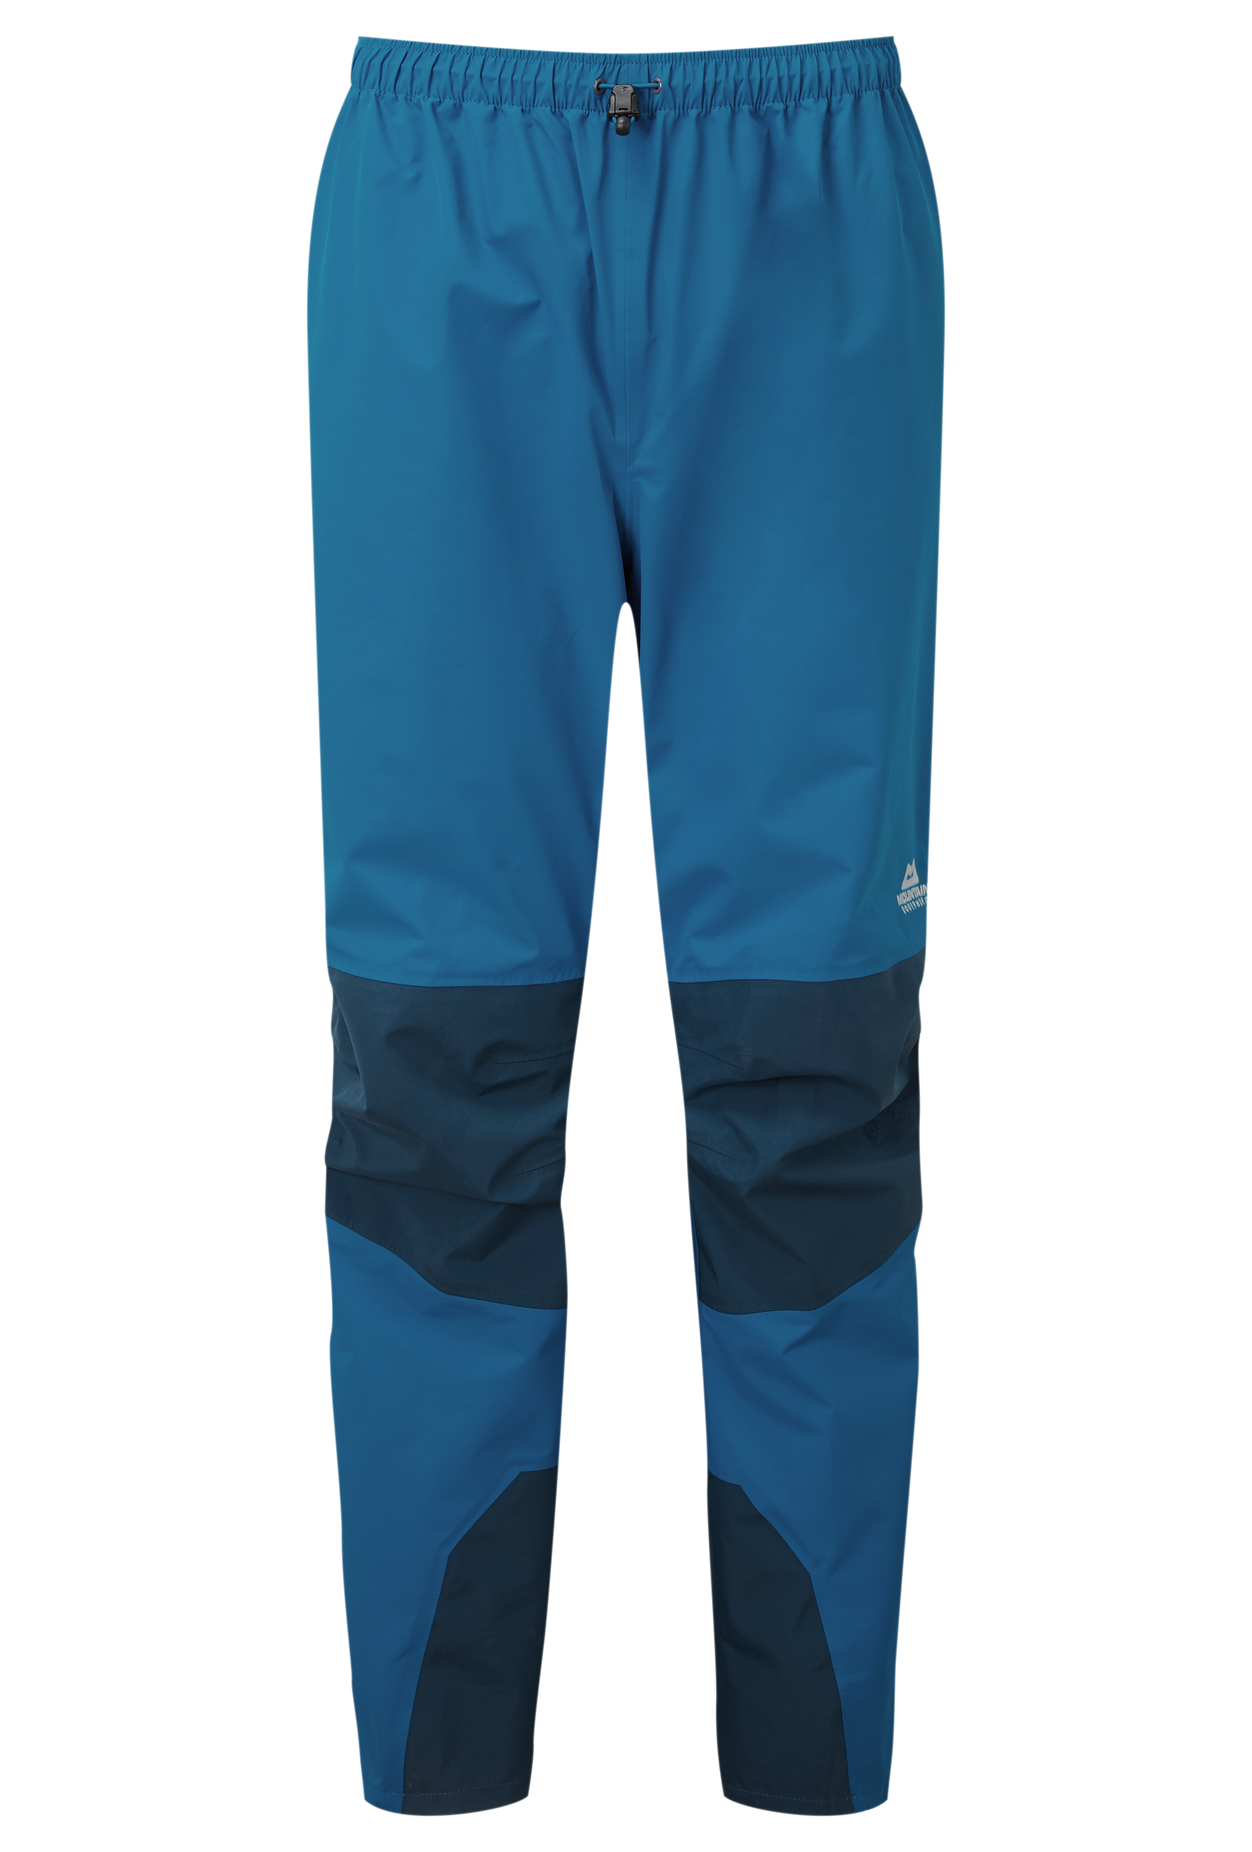 Mountain Equipment pánské nepromokavé kalhoty Saltoro Pant Barva: Mykonos/Majolica, Velikost: L